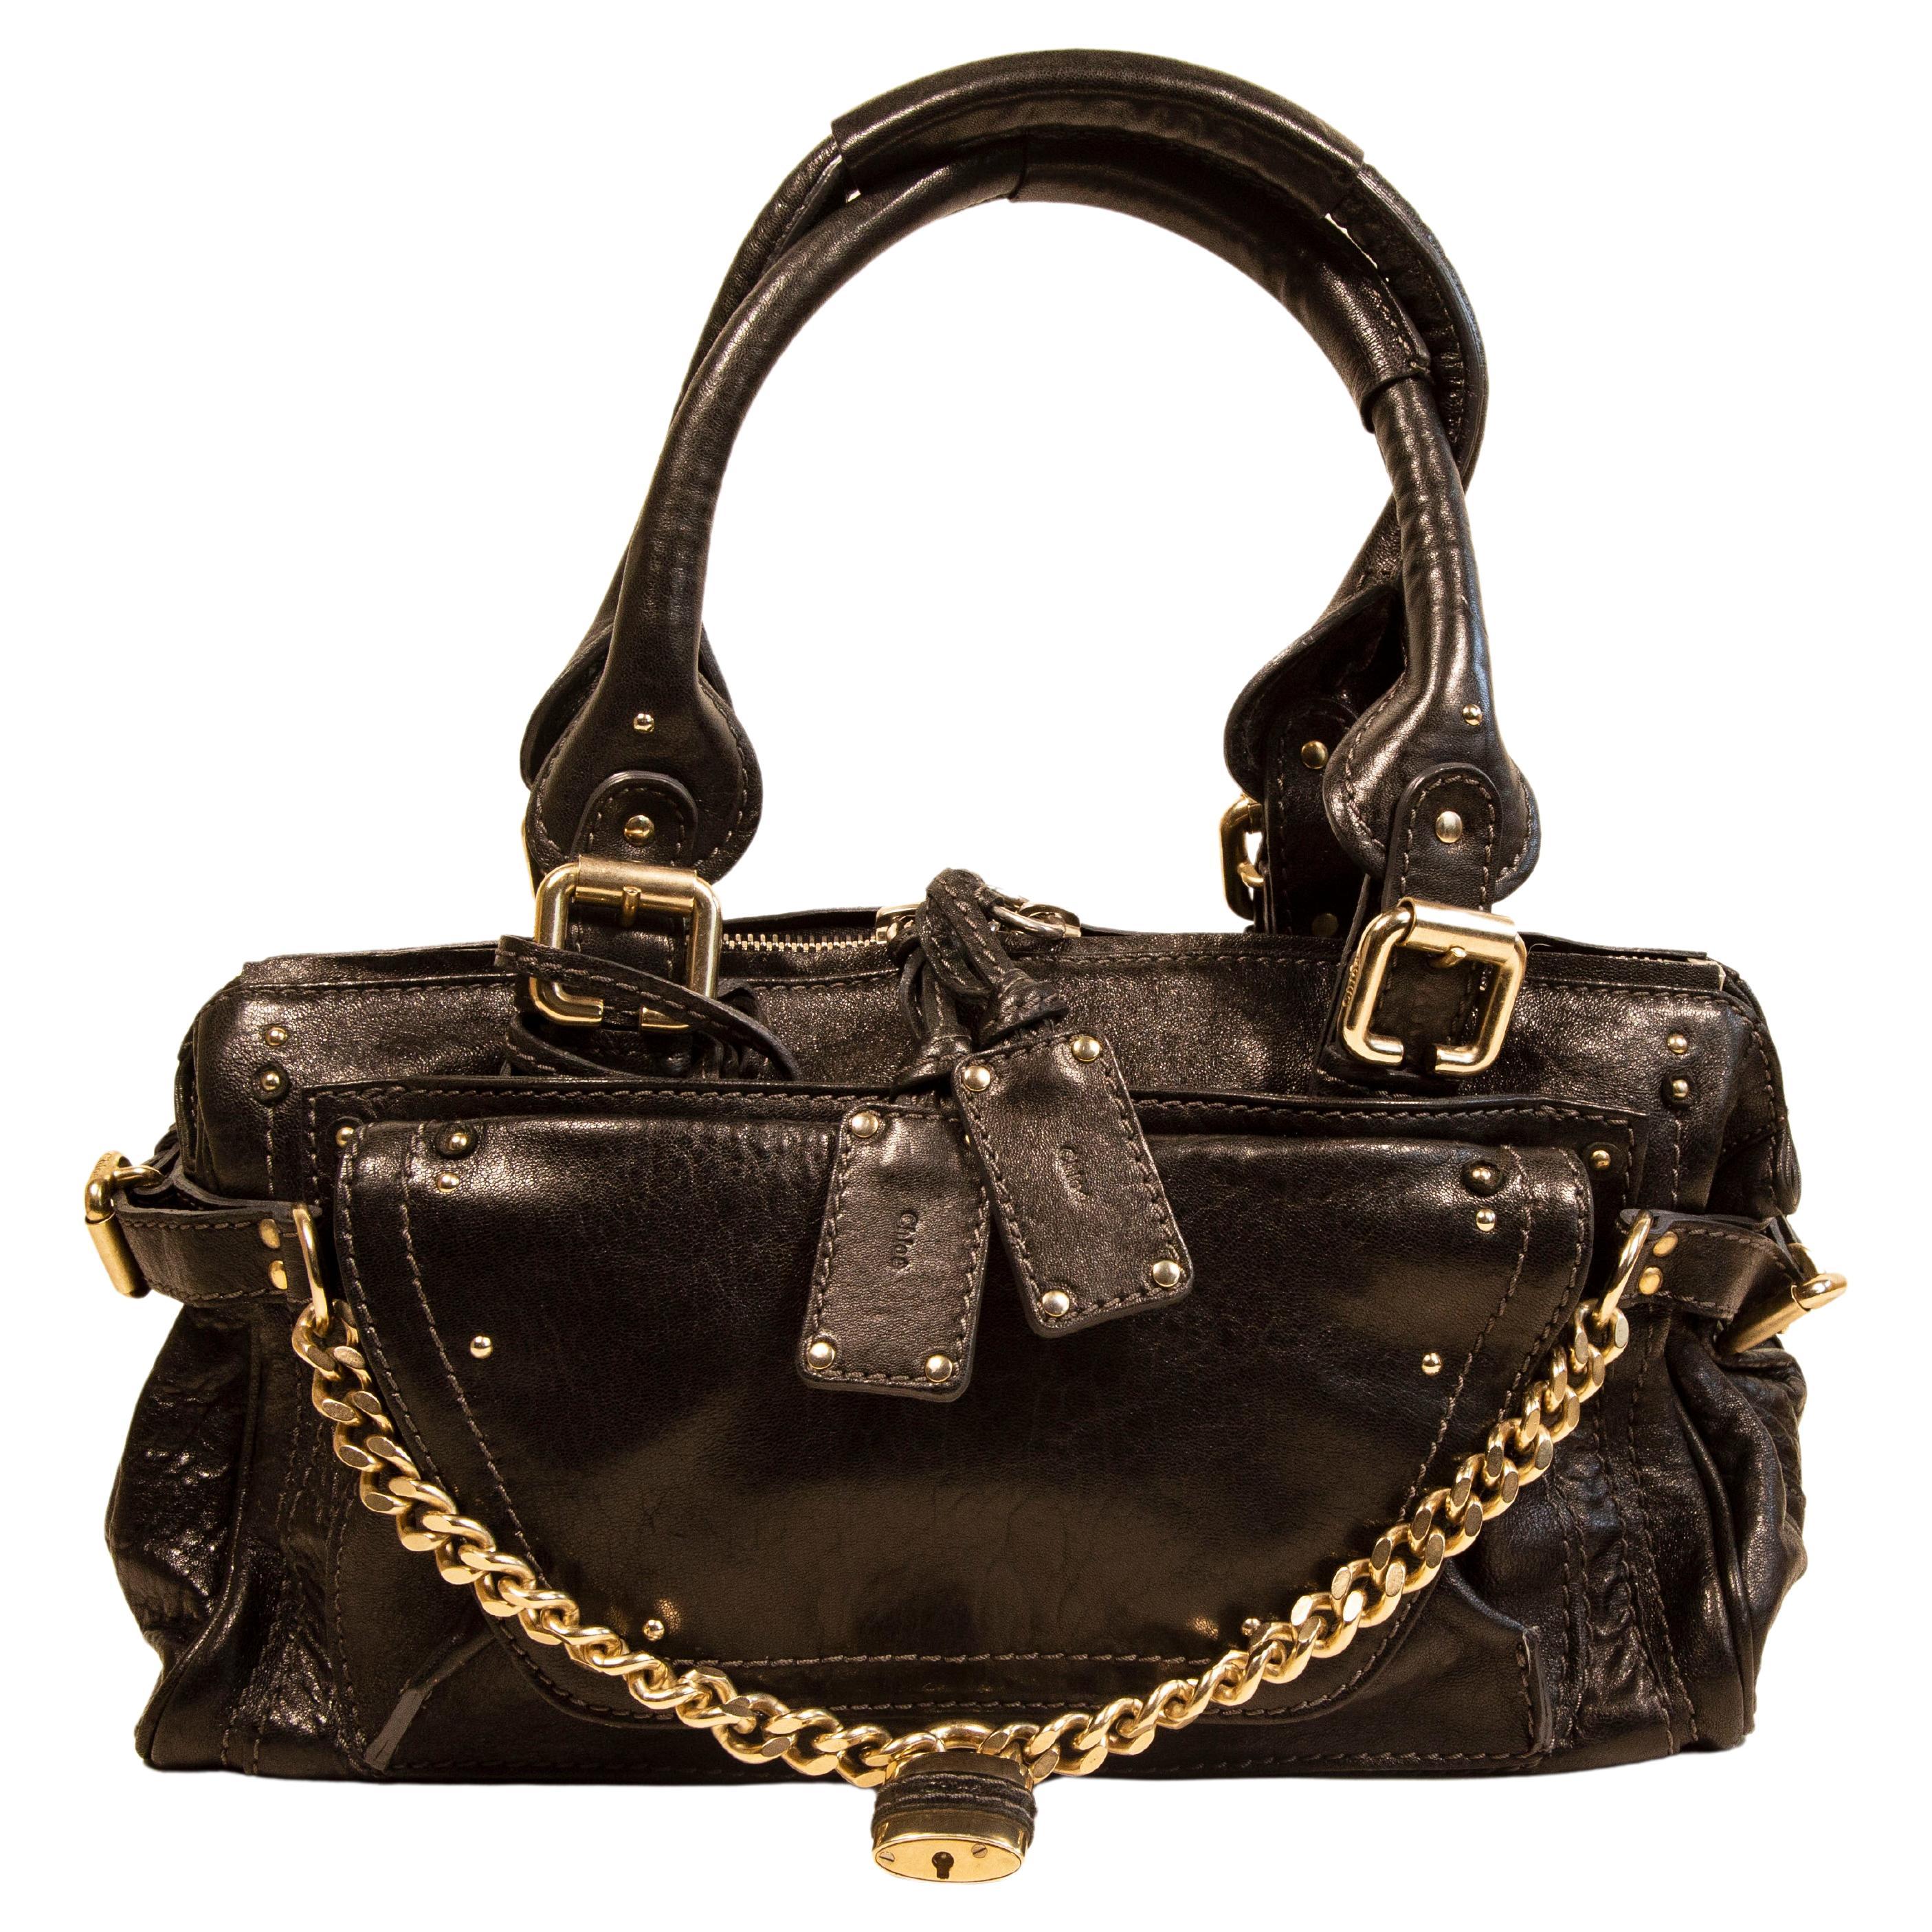 Chloe Paddington Chain Handbag Shoulder Bag in Black Leather 2005 For Sale